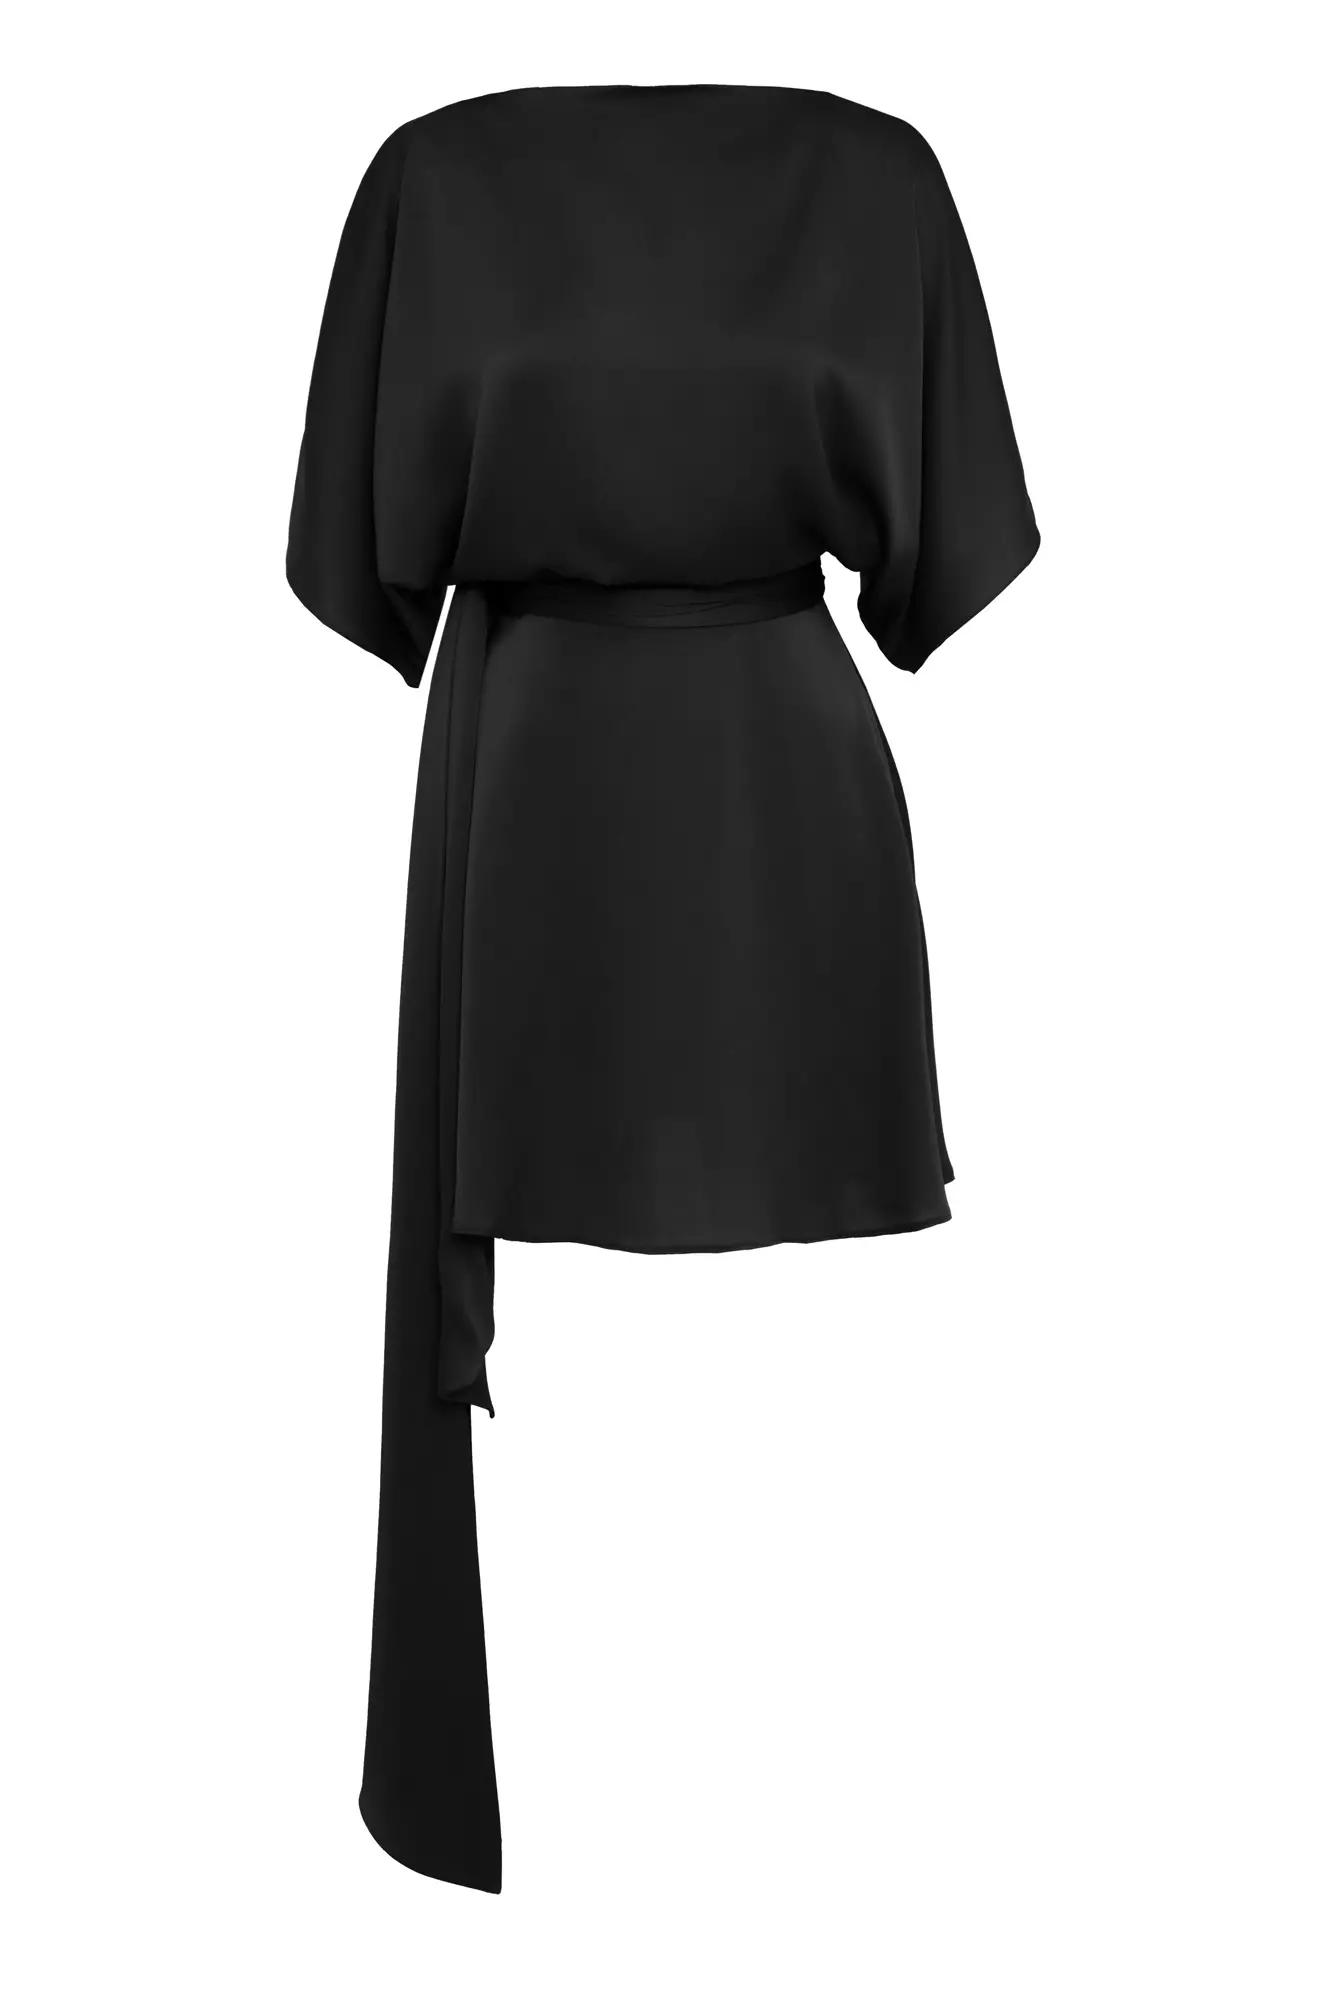 Black satin short sleeve mini dress